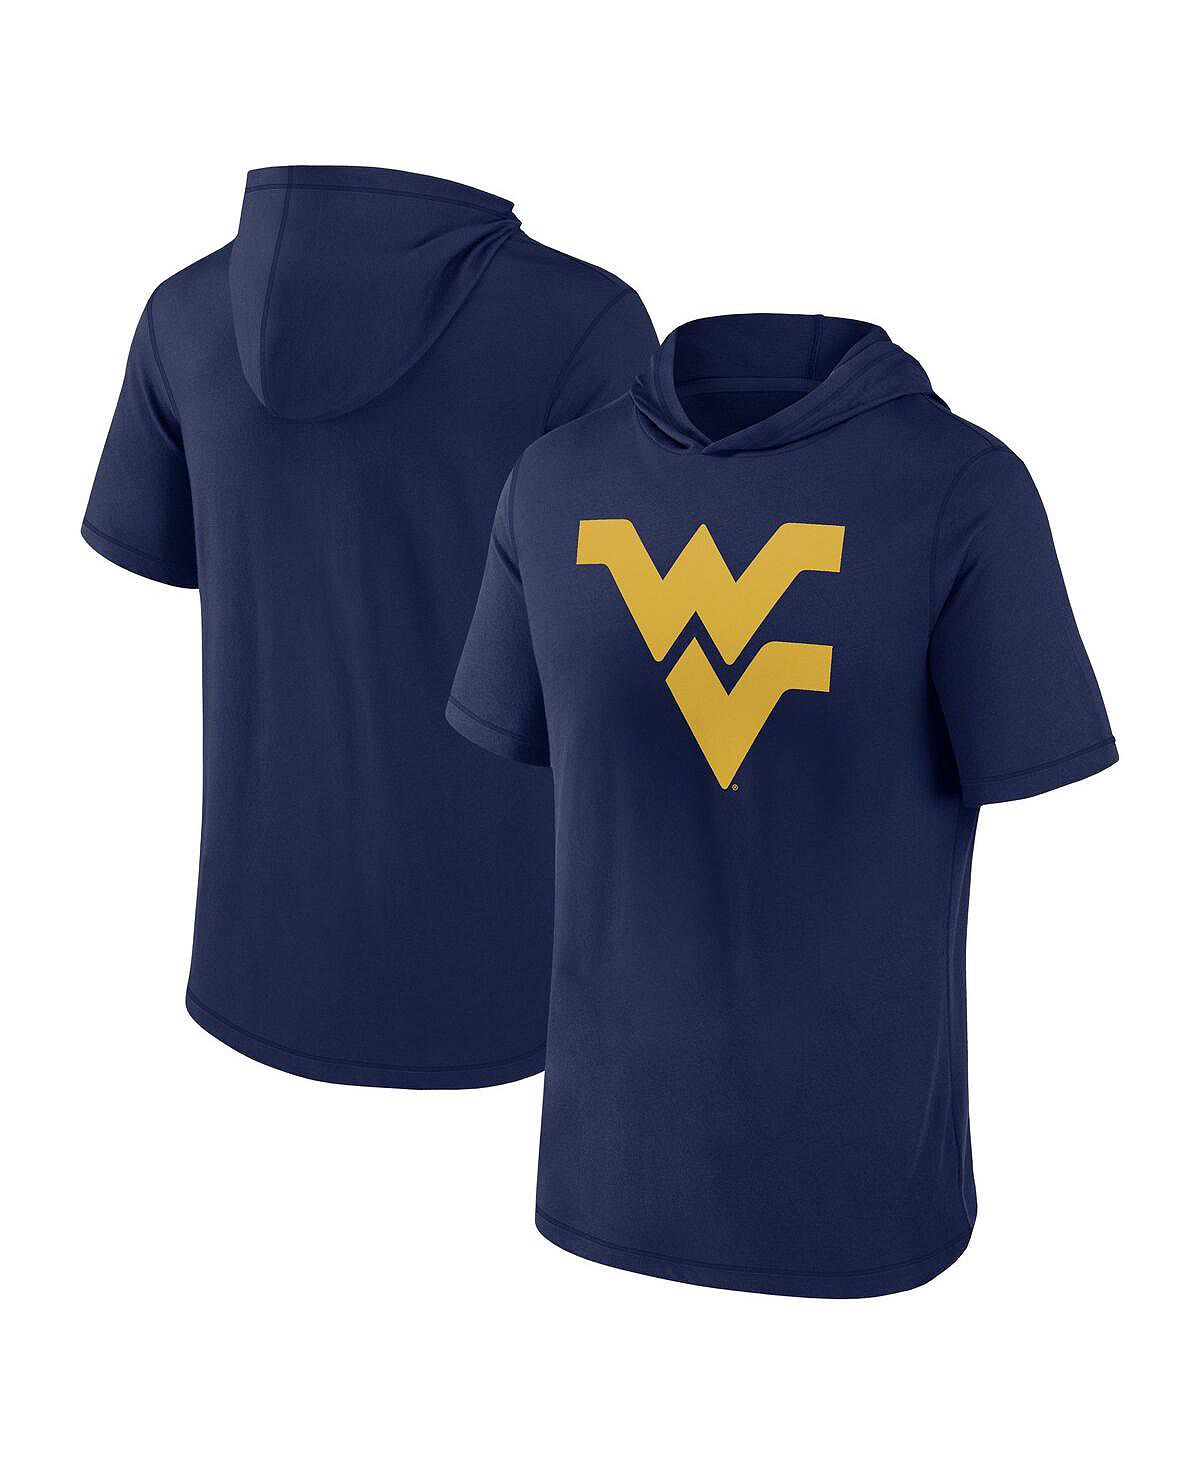 Мужская темно-синяя футболка с капюшоном с логотипом West Virginia Mountaineers Primary Fanatics flagicts 3x5 ft west virginia state flag for decor